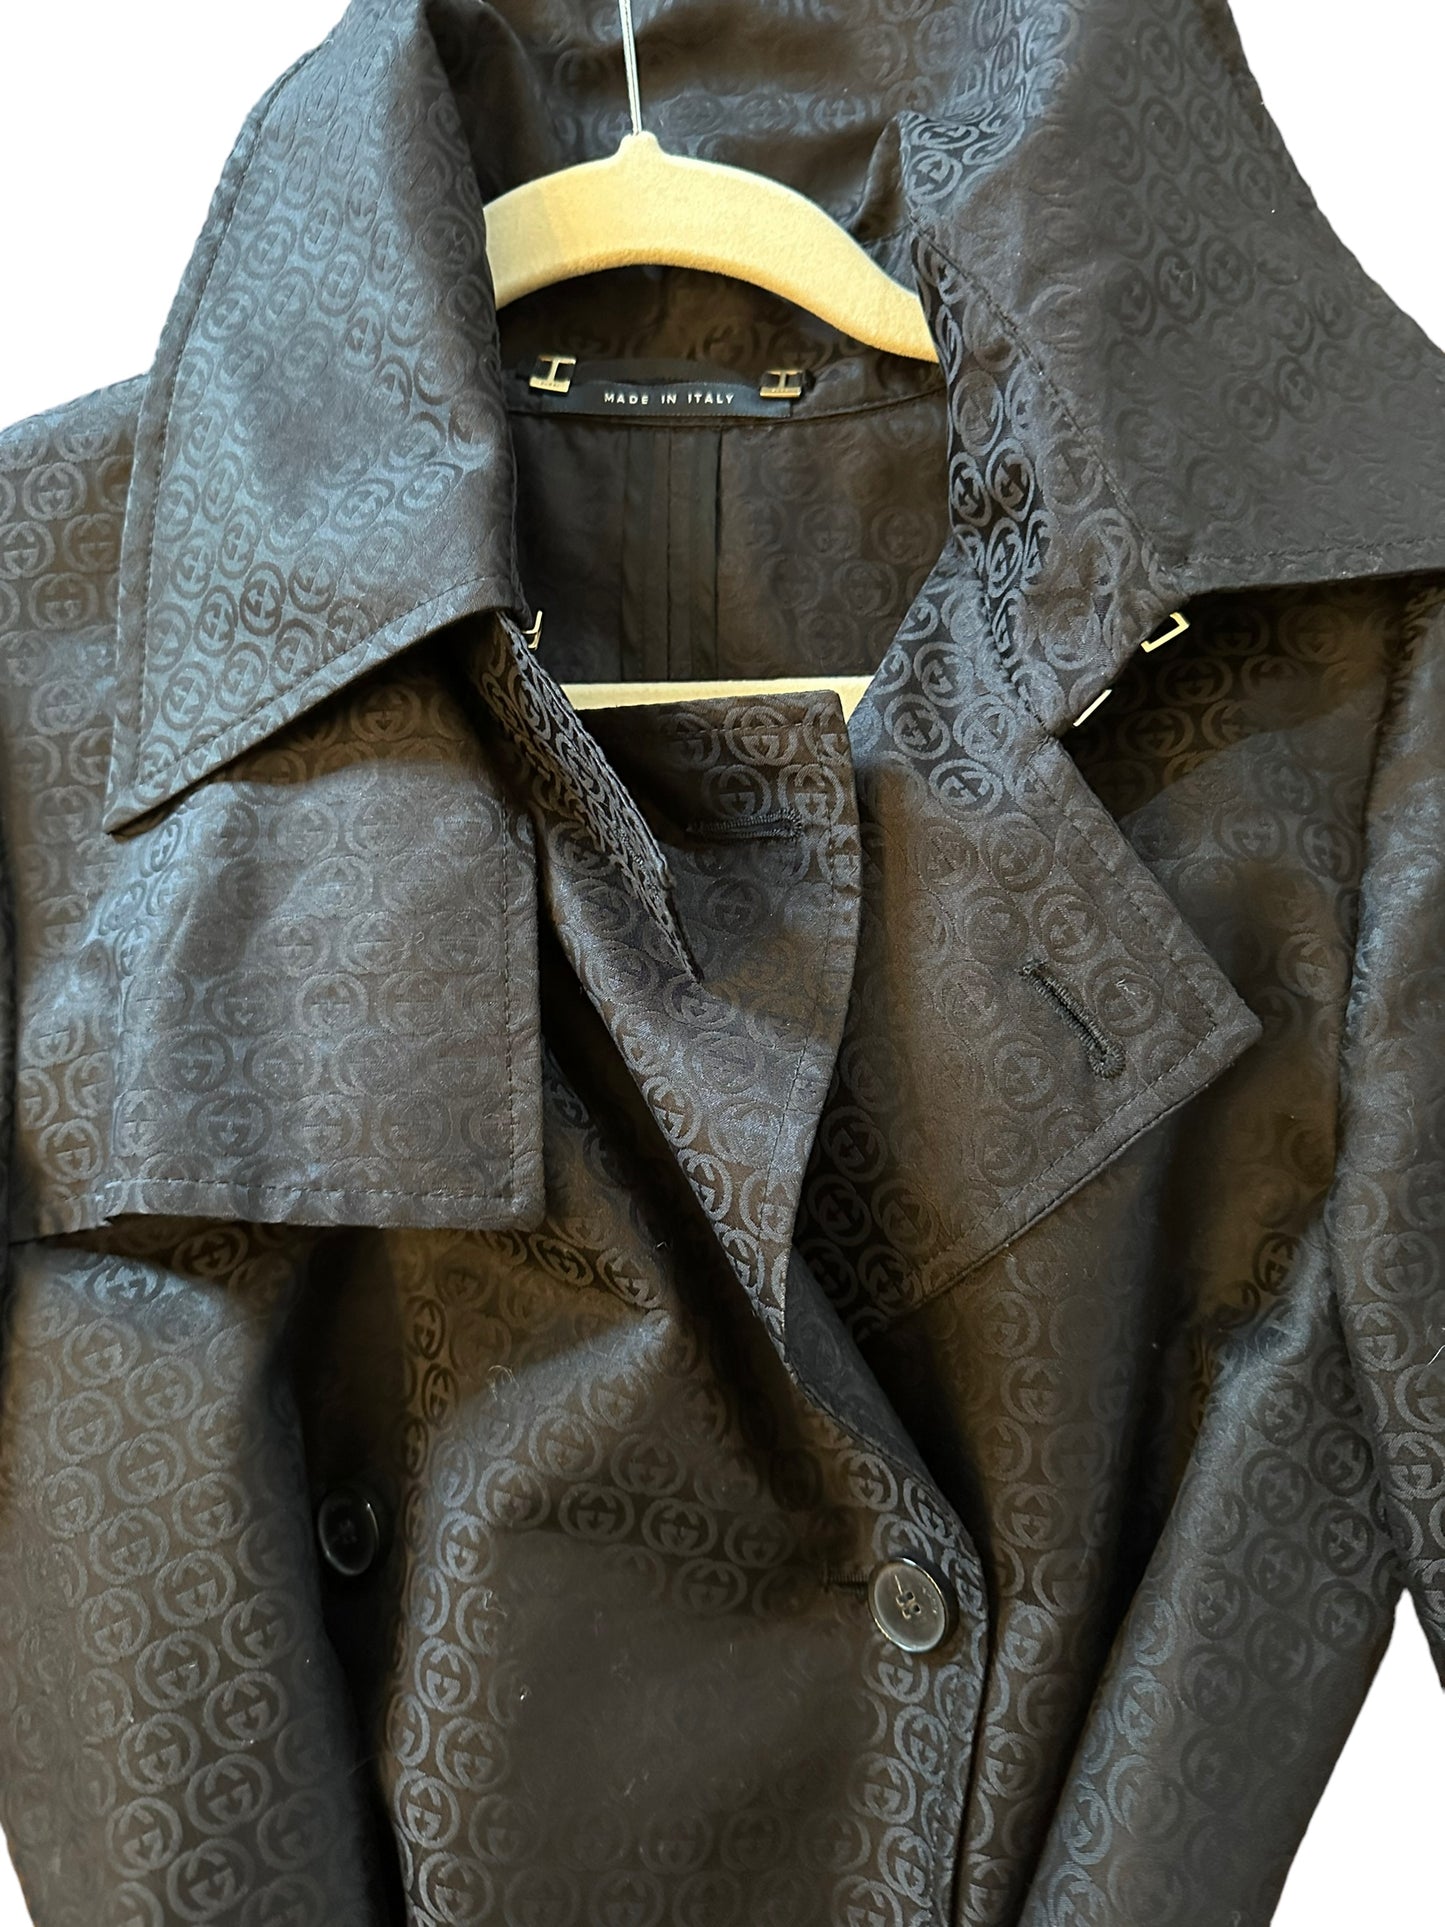 Gucci Tom Ford Black Guccissima trench coat 2003 GG print size IT40